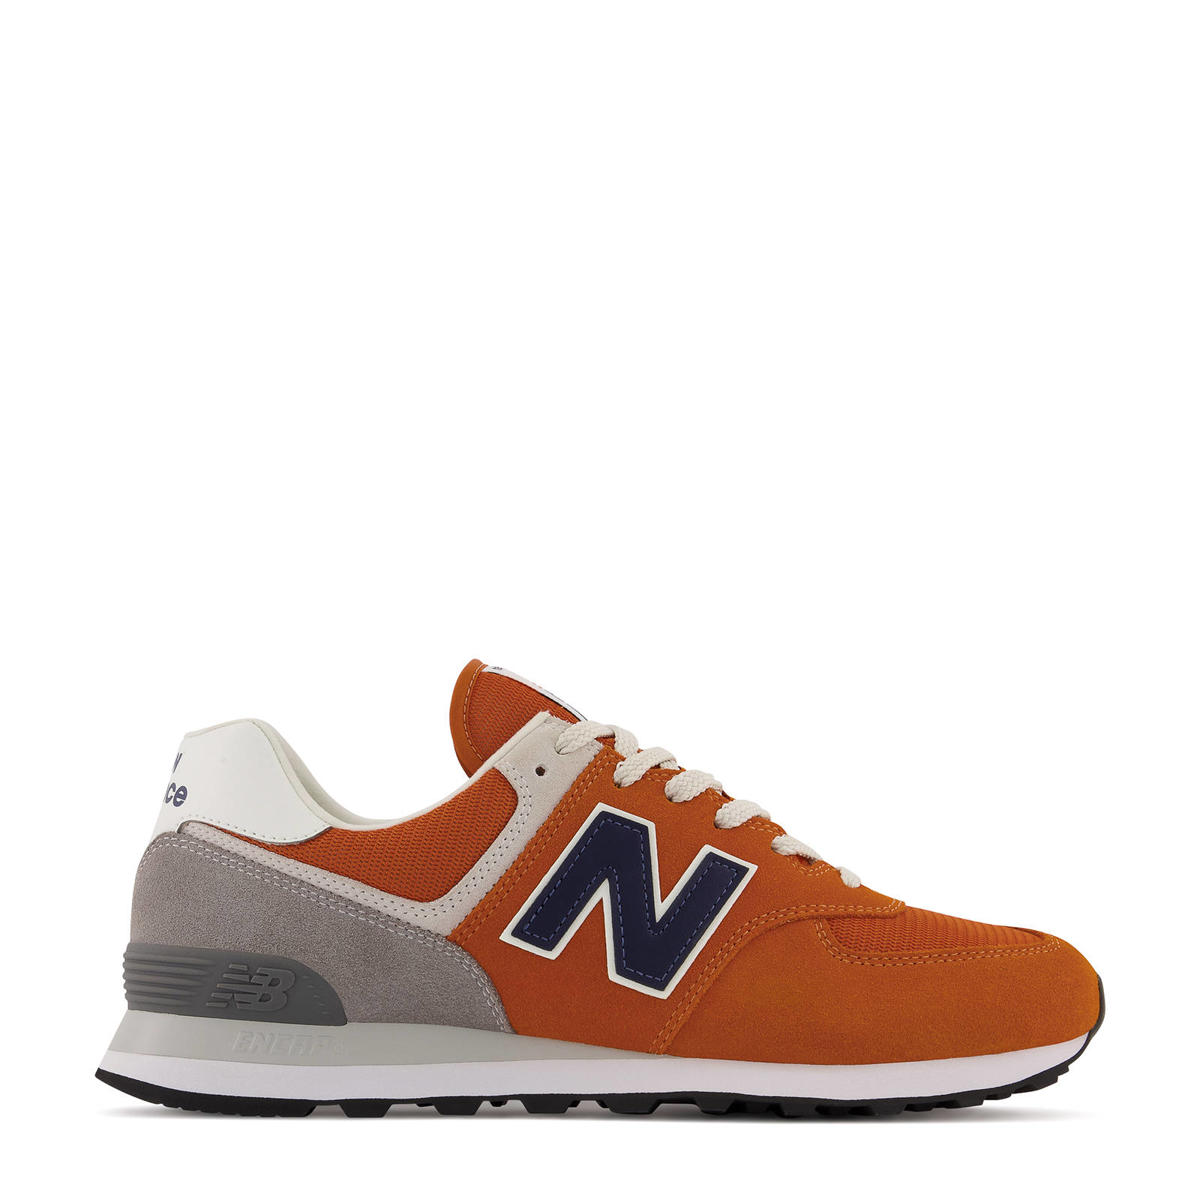 New 574 sneakers oranje/donkerblauw | wehkamp